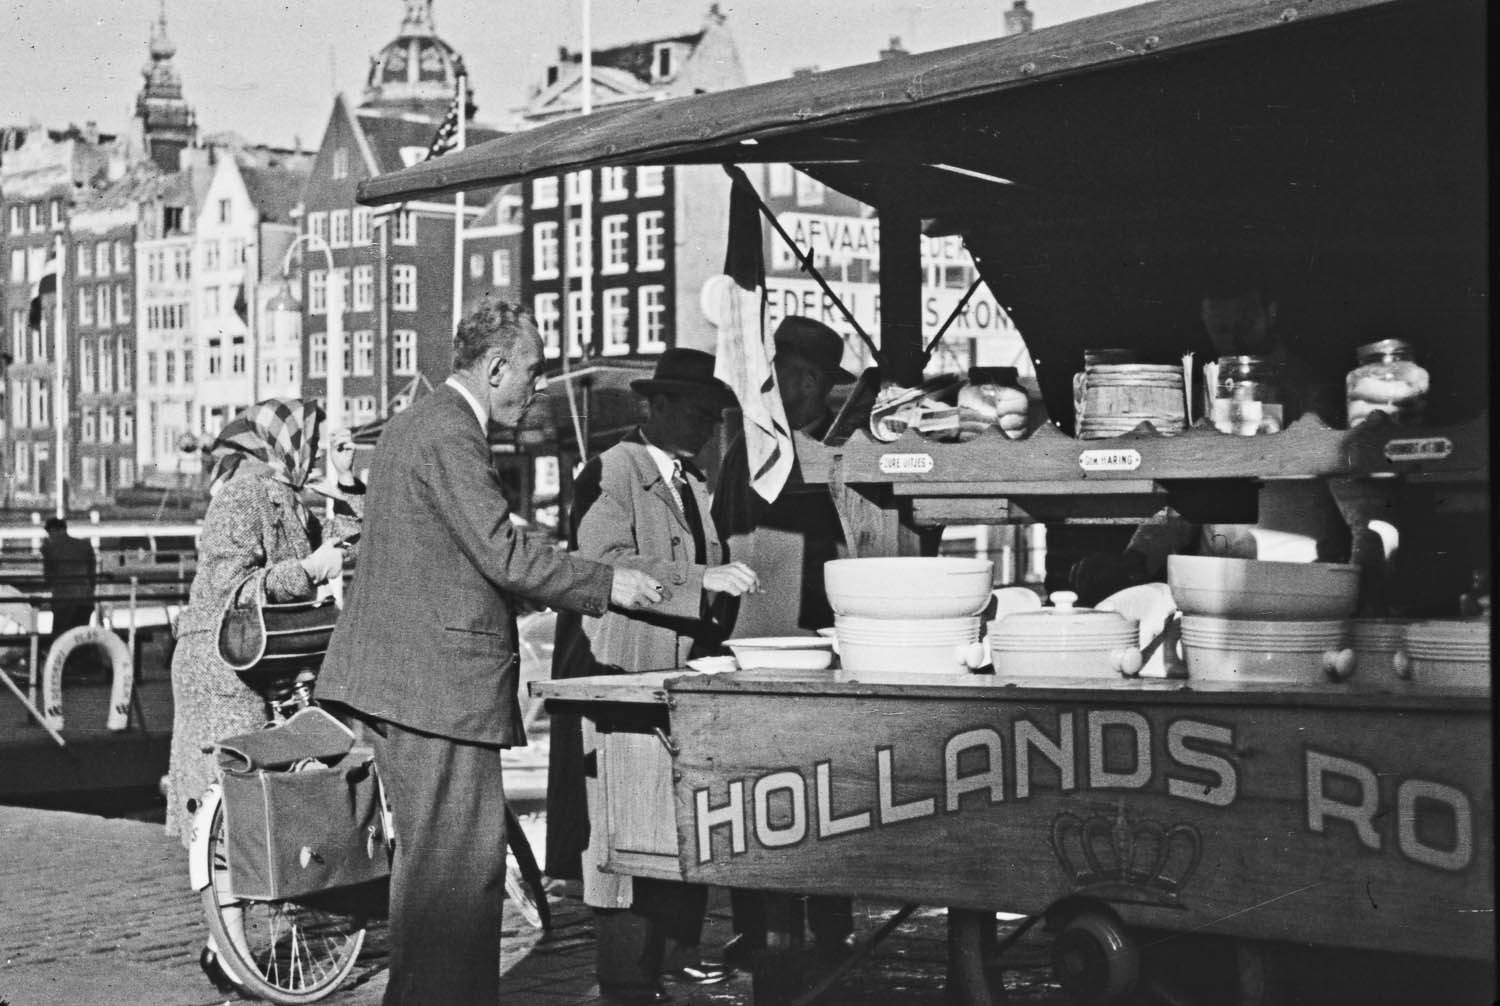 Near tour boats, Amsterdam, 1958